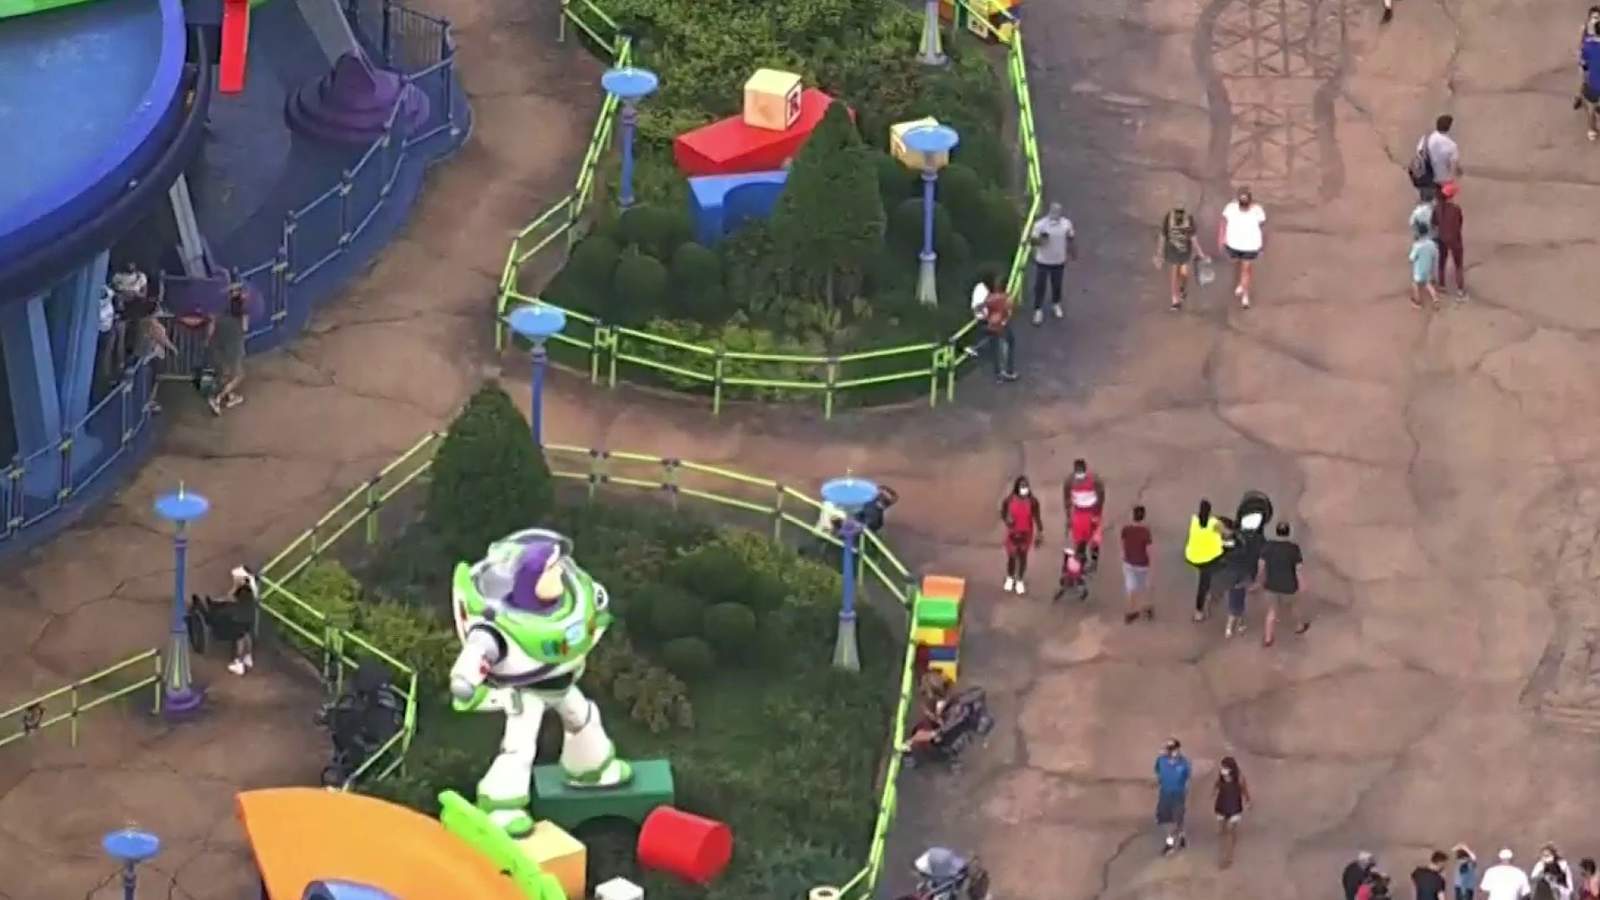 Disney layoffs will be felt beyond gates of theme parks